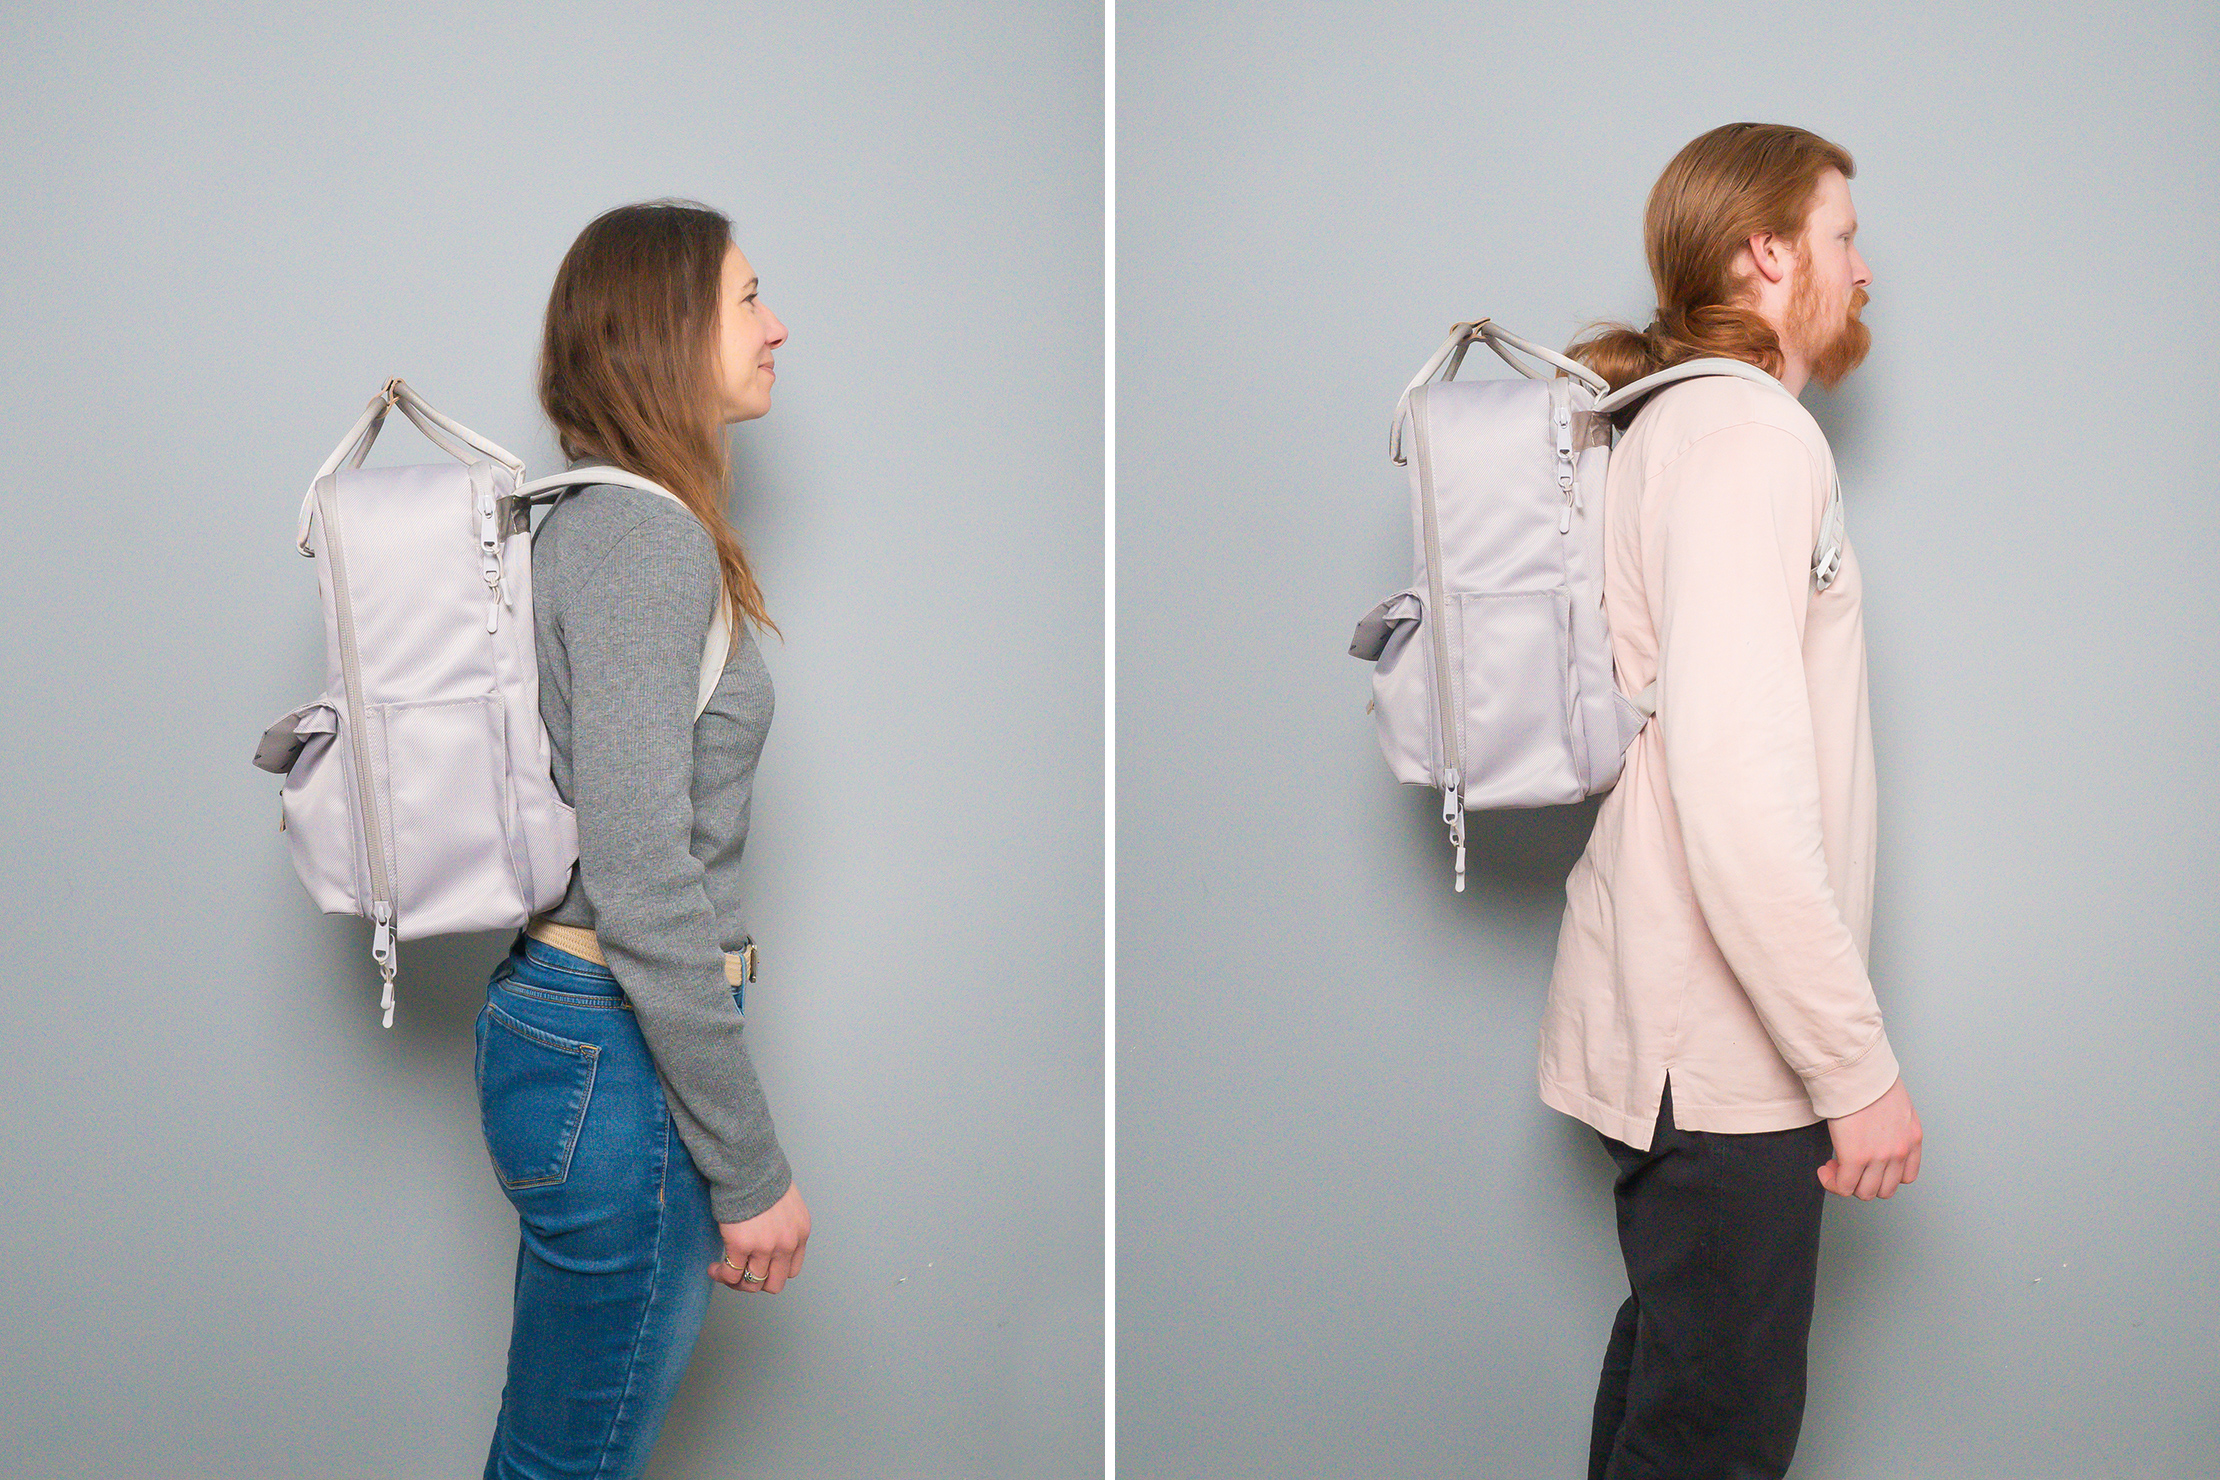 Langly Sierra Backpack Side By Side